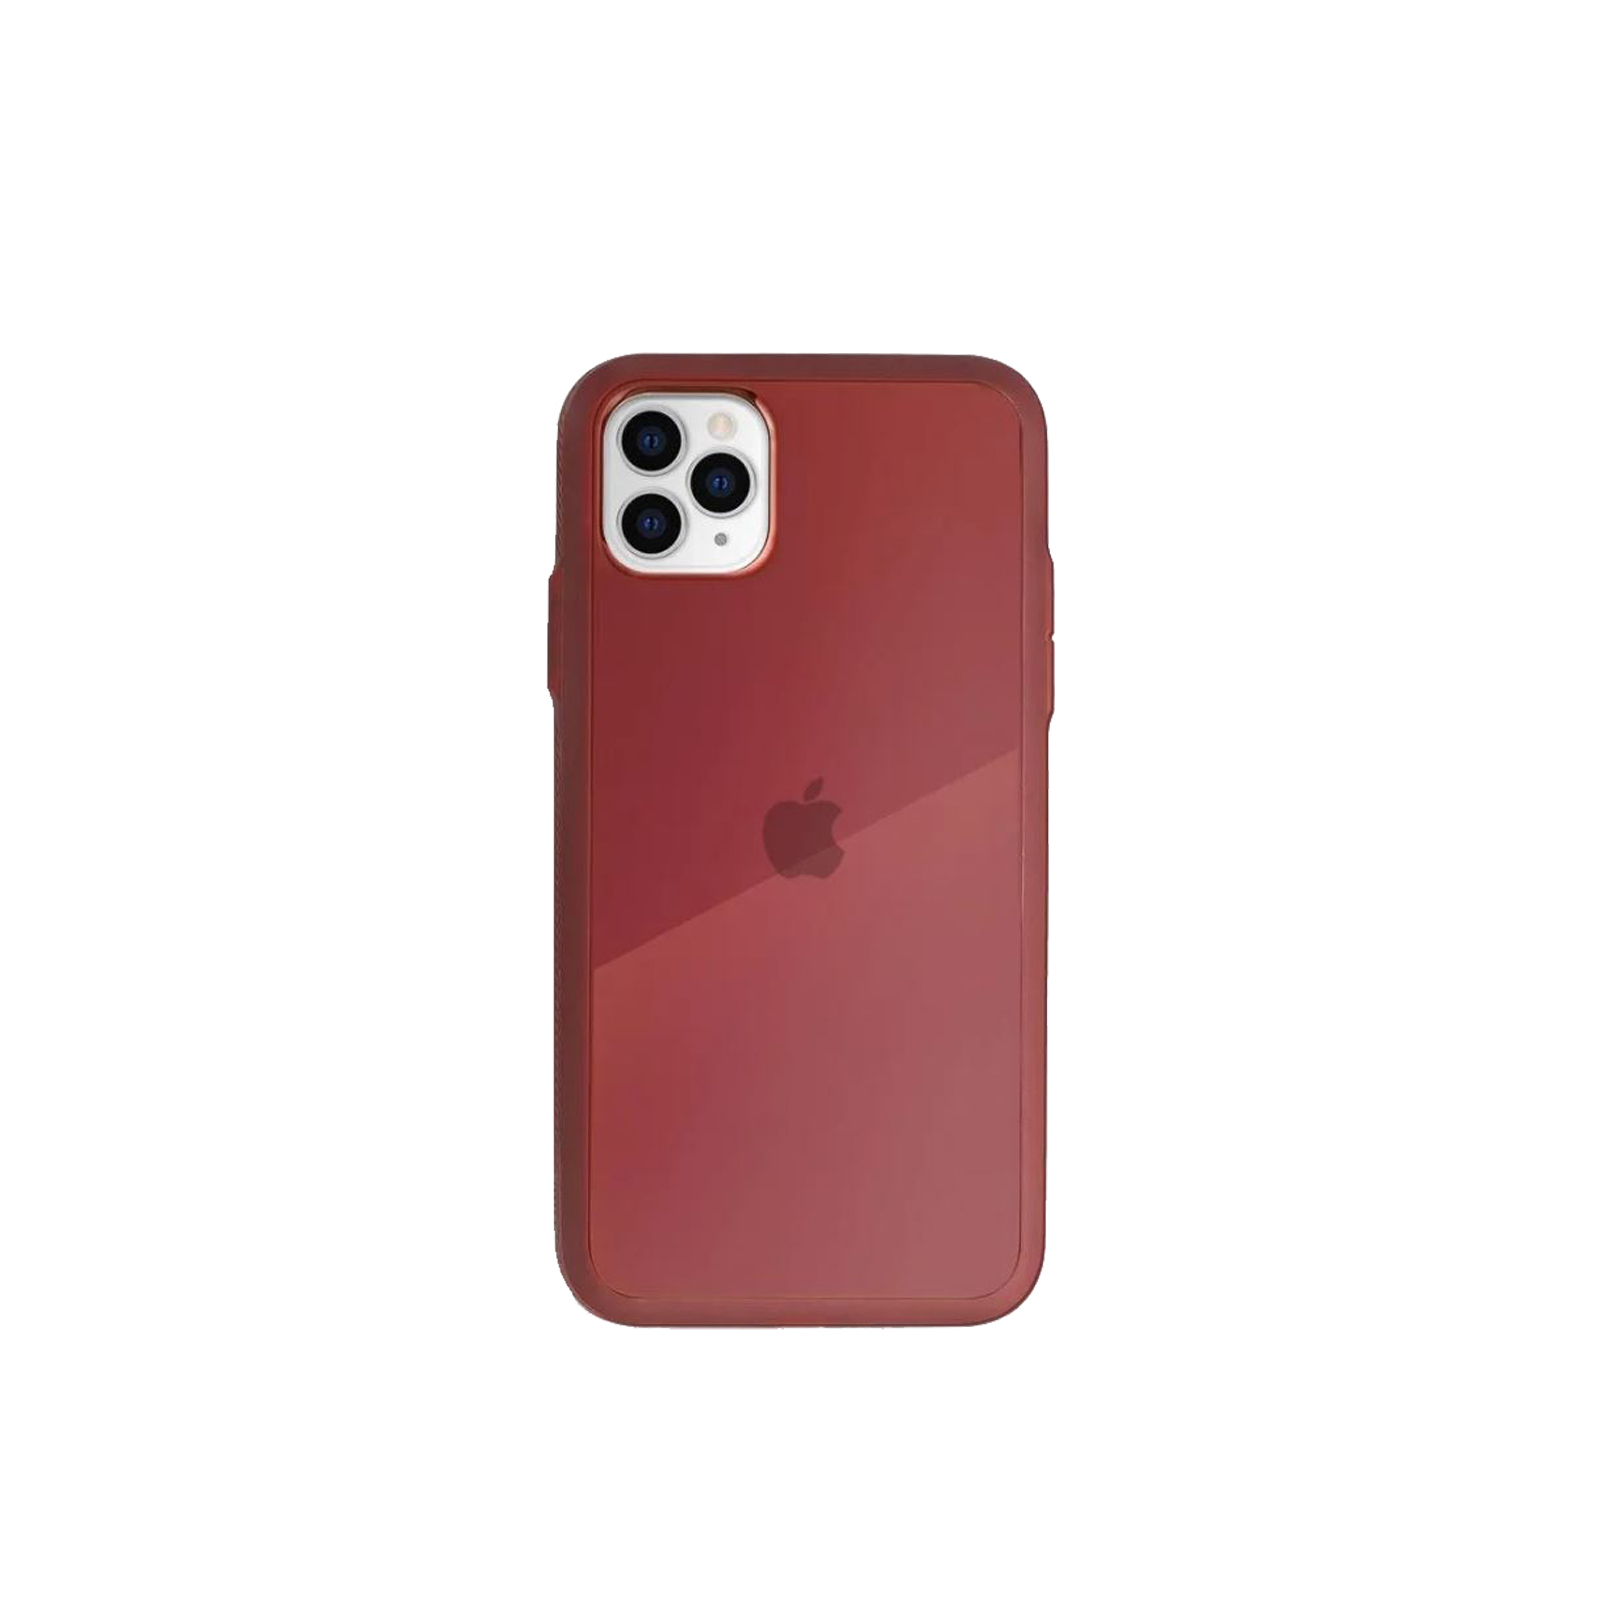 ParadigmS iPhone 11 Pro Max Maroon Case Brand New